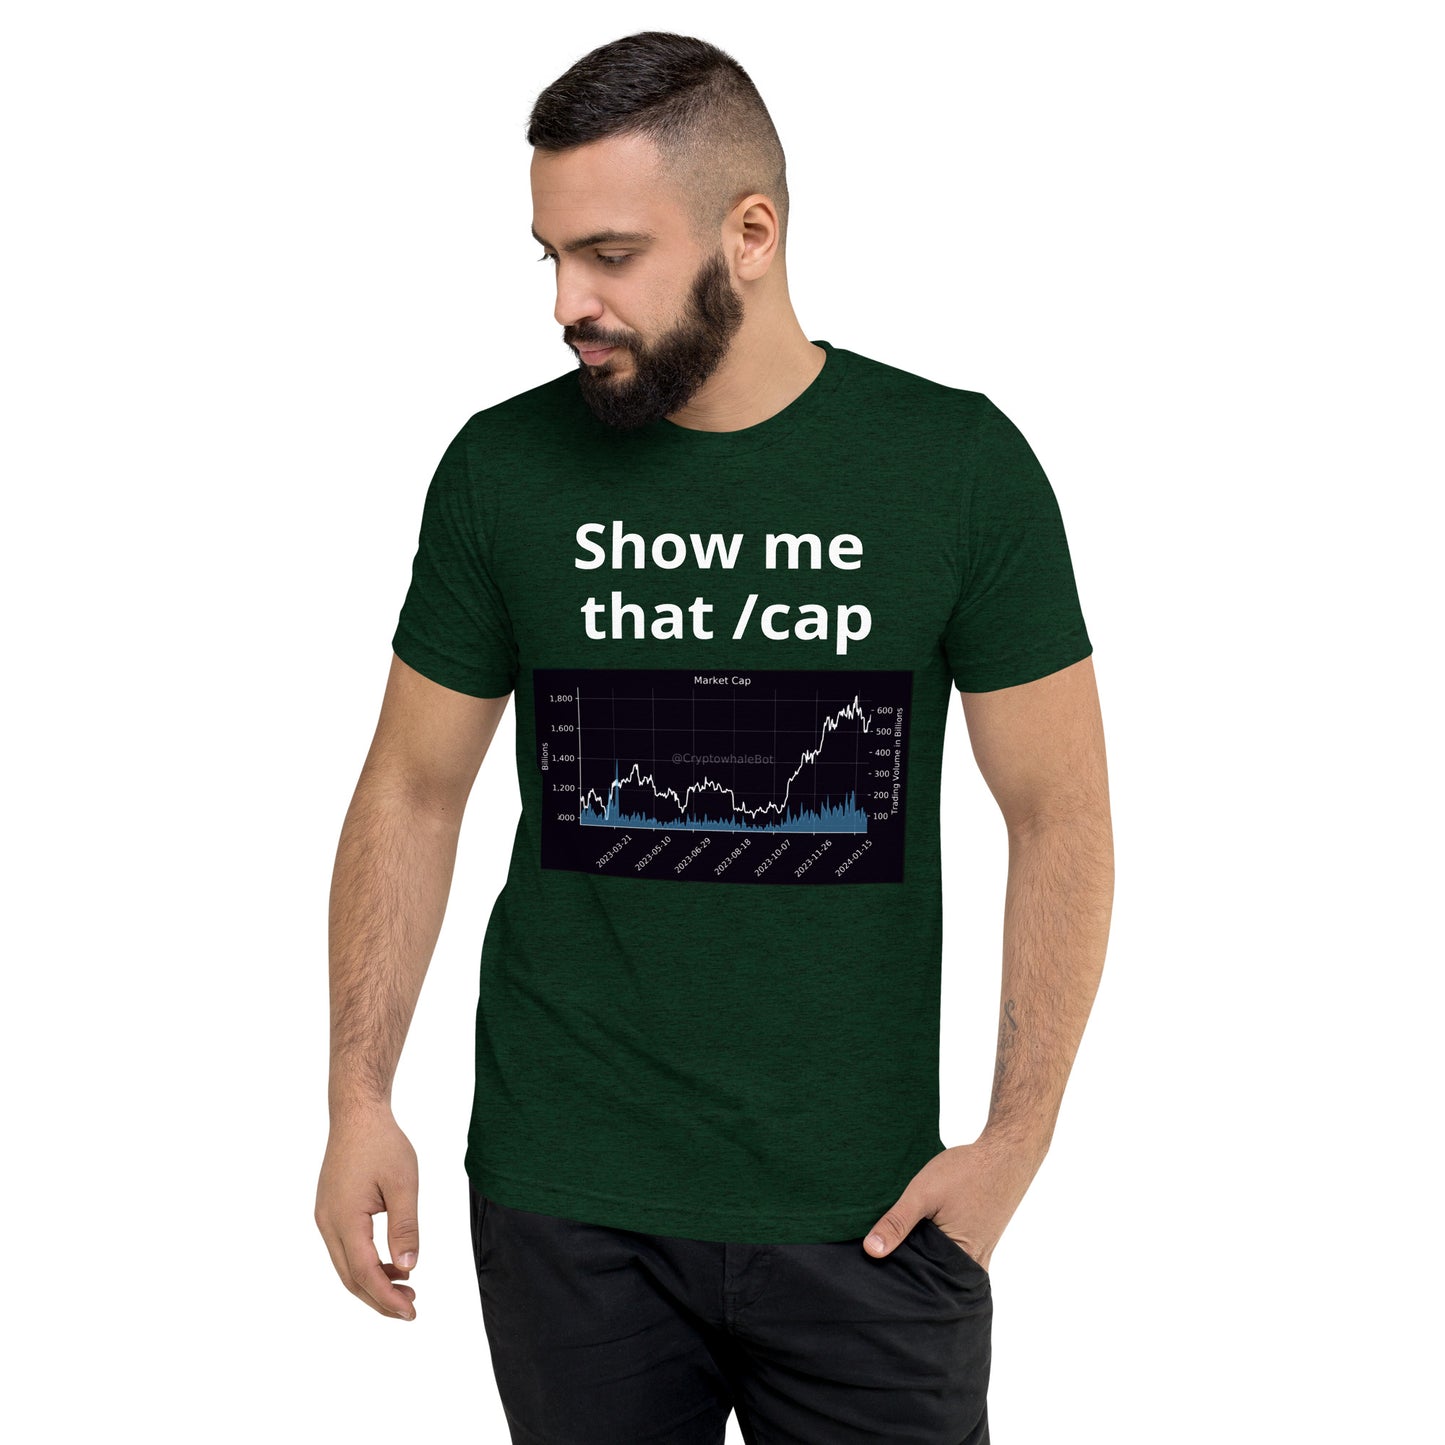 /cap short sleeve t-shirt